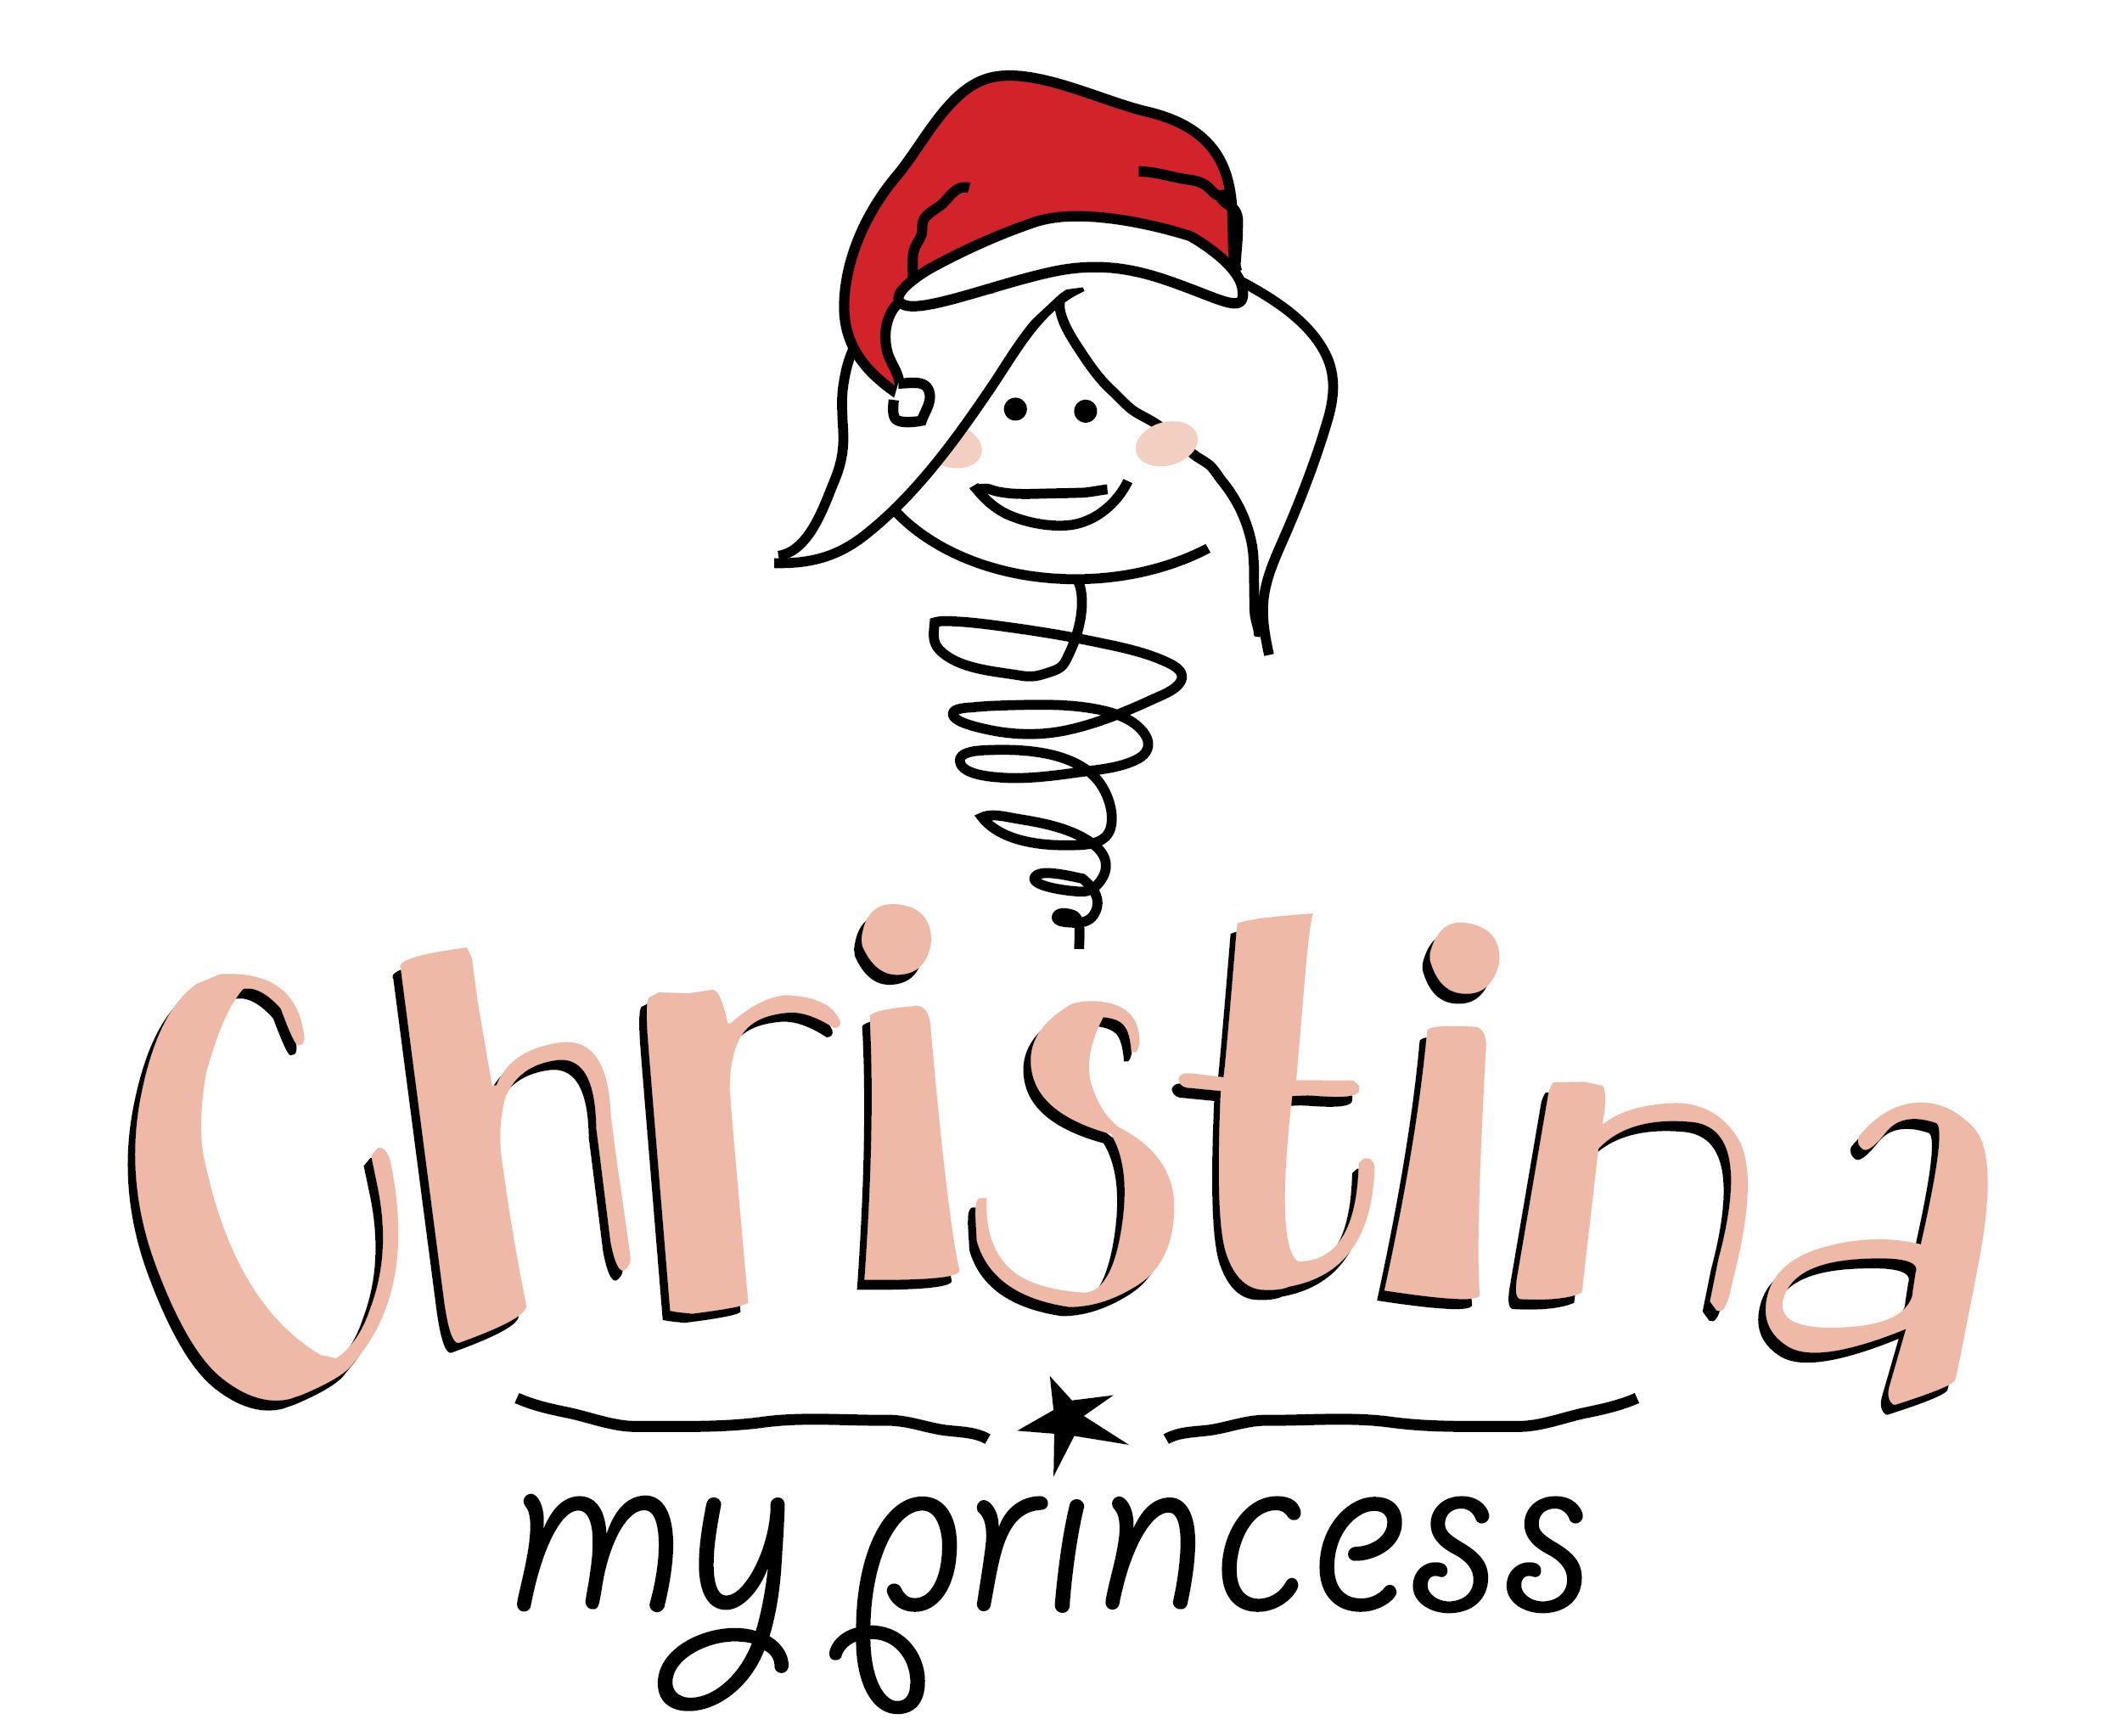 #Christina my princess